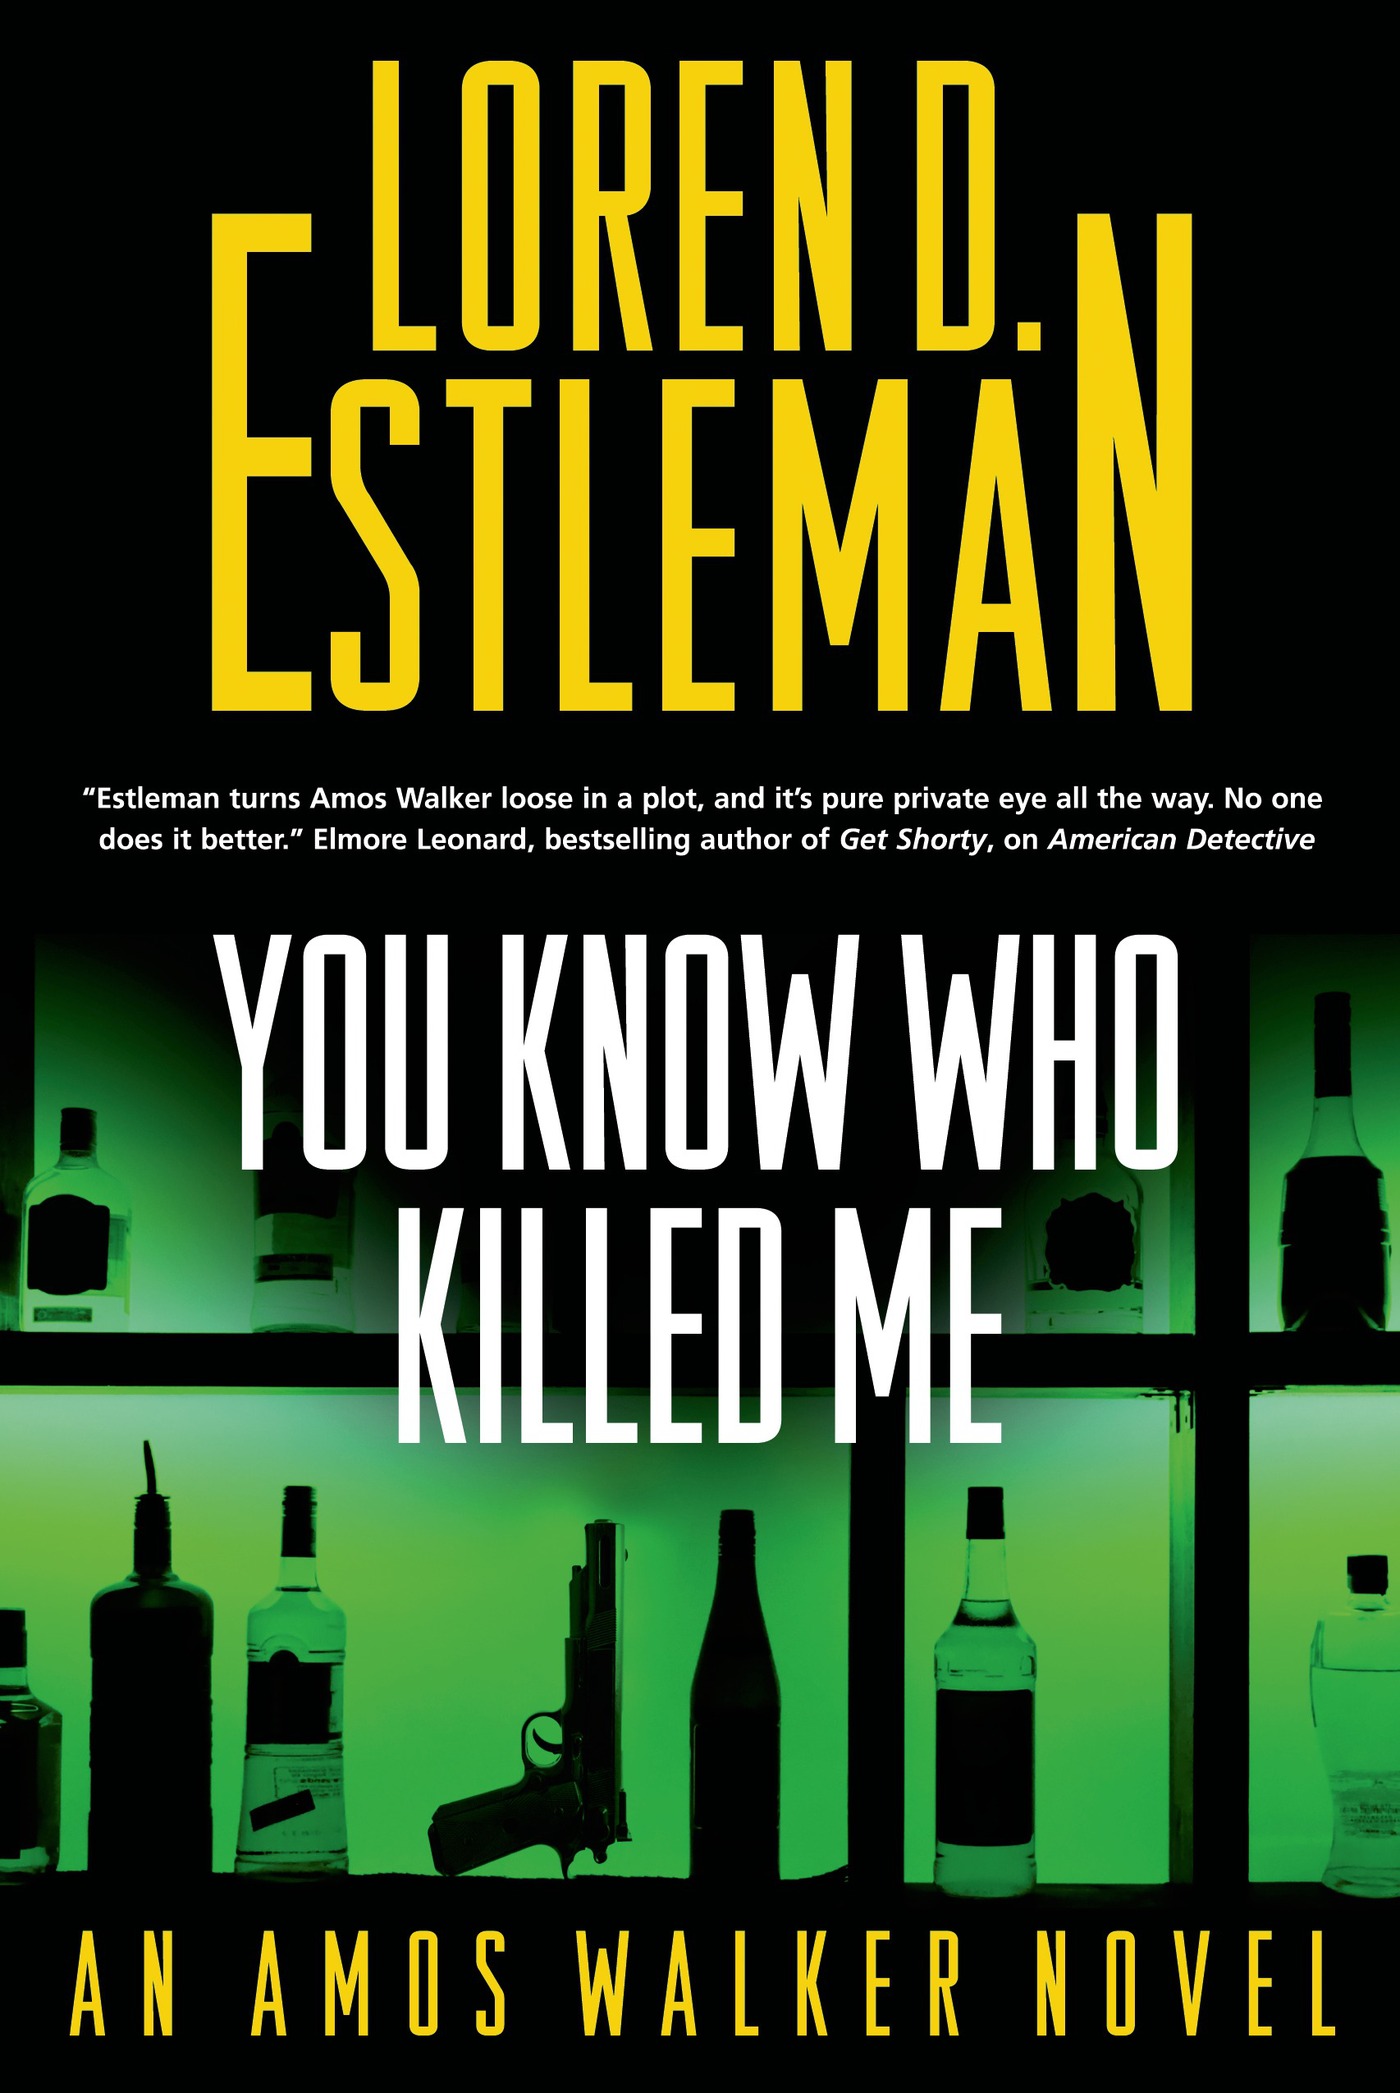 You Know Who Killed Me : An Amos Walker Novel by Loren D. Estleman